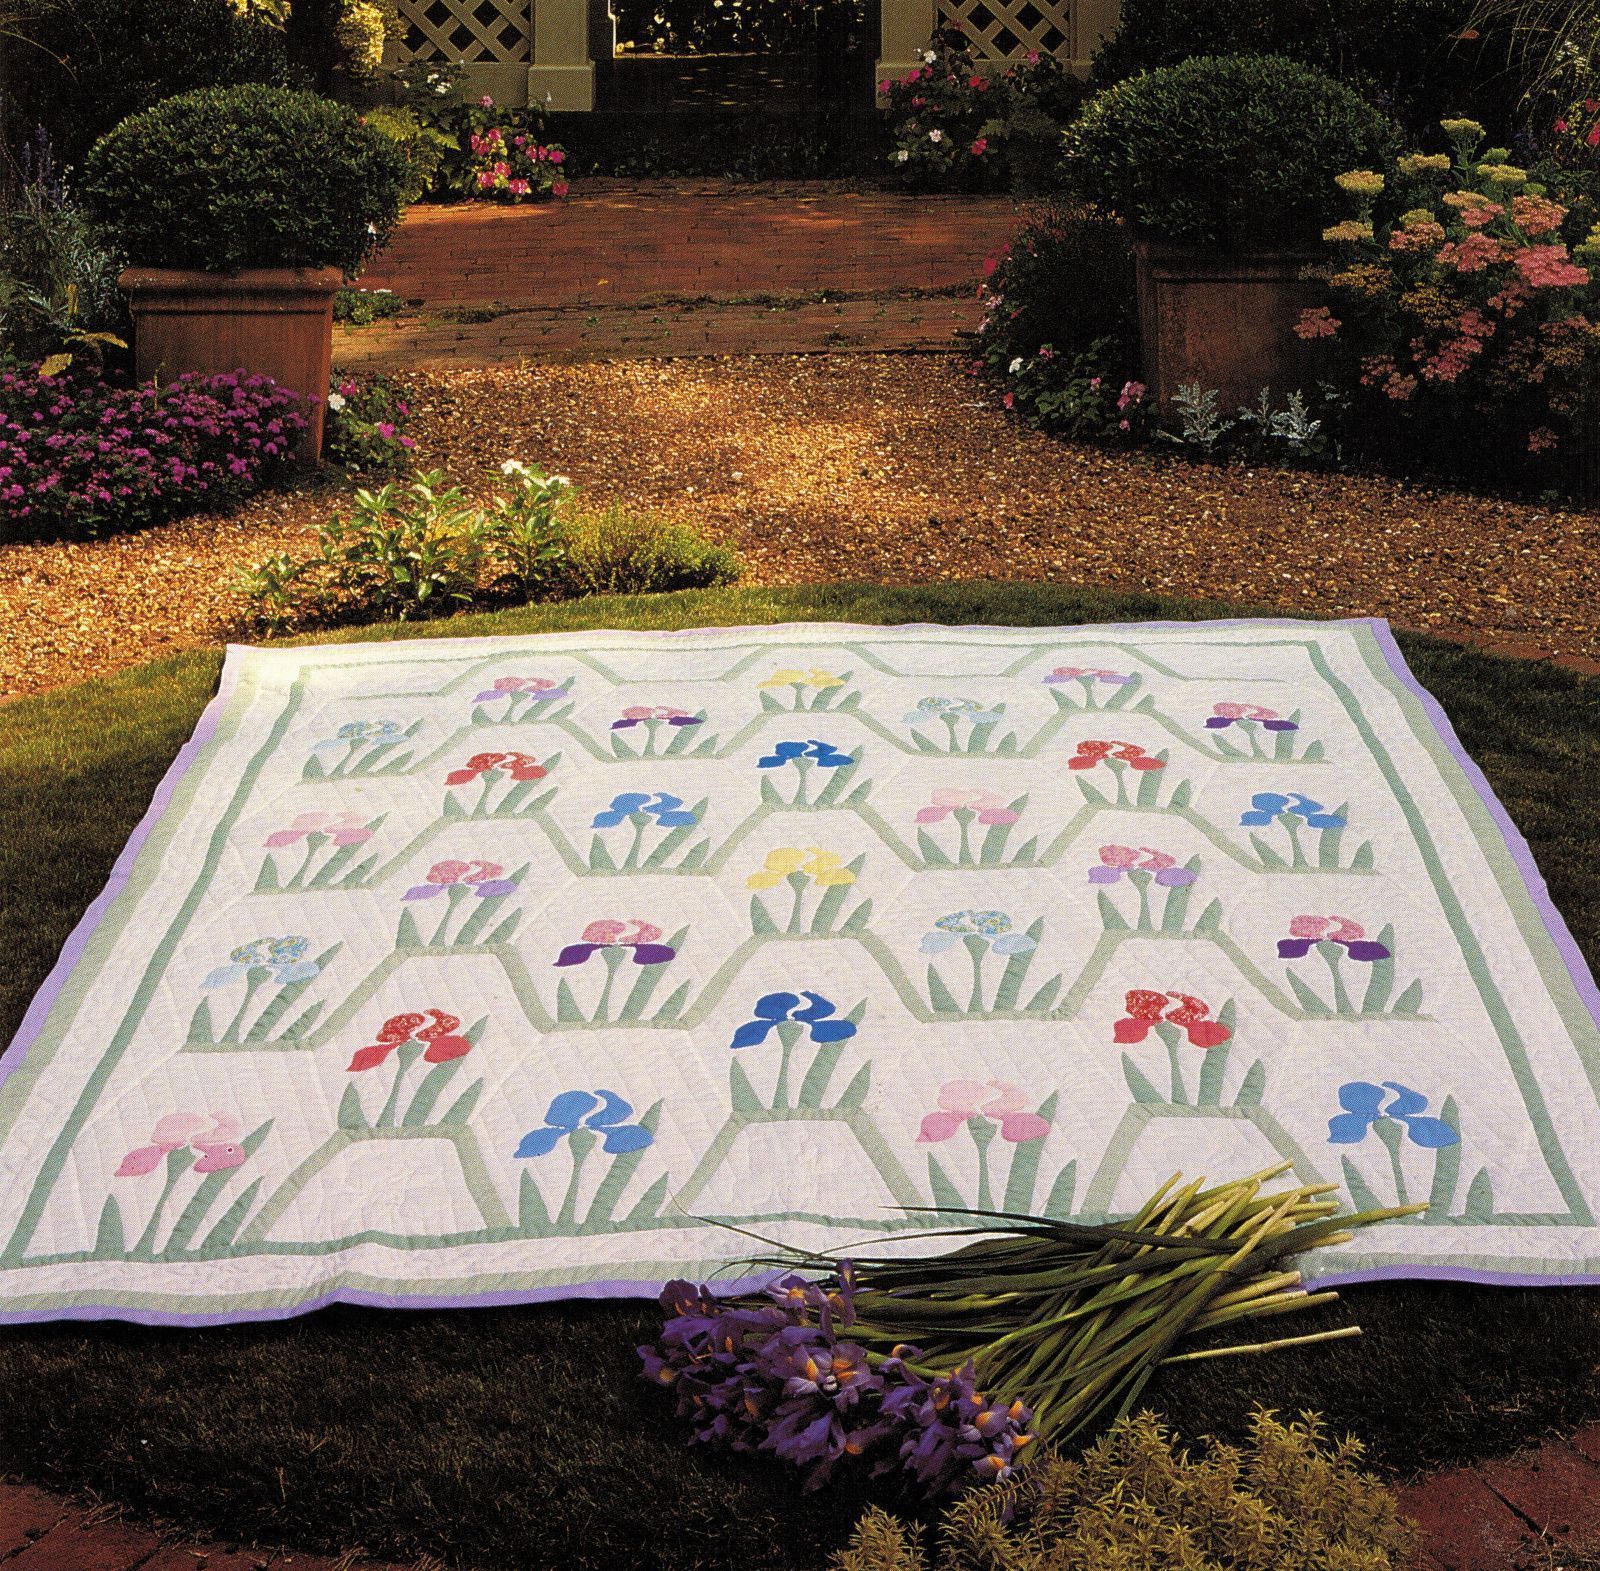 Best Loved Quilt Garden Iris Applique Sew Pattern Flexible Plastic Template - $9.99